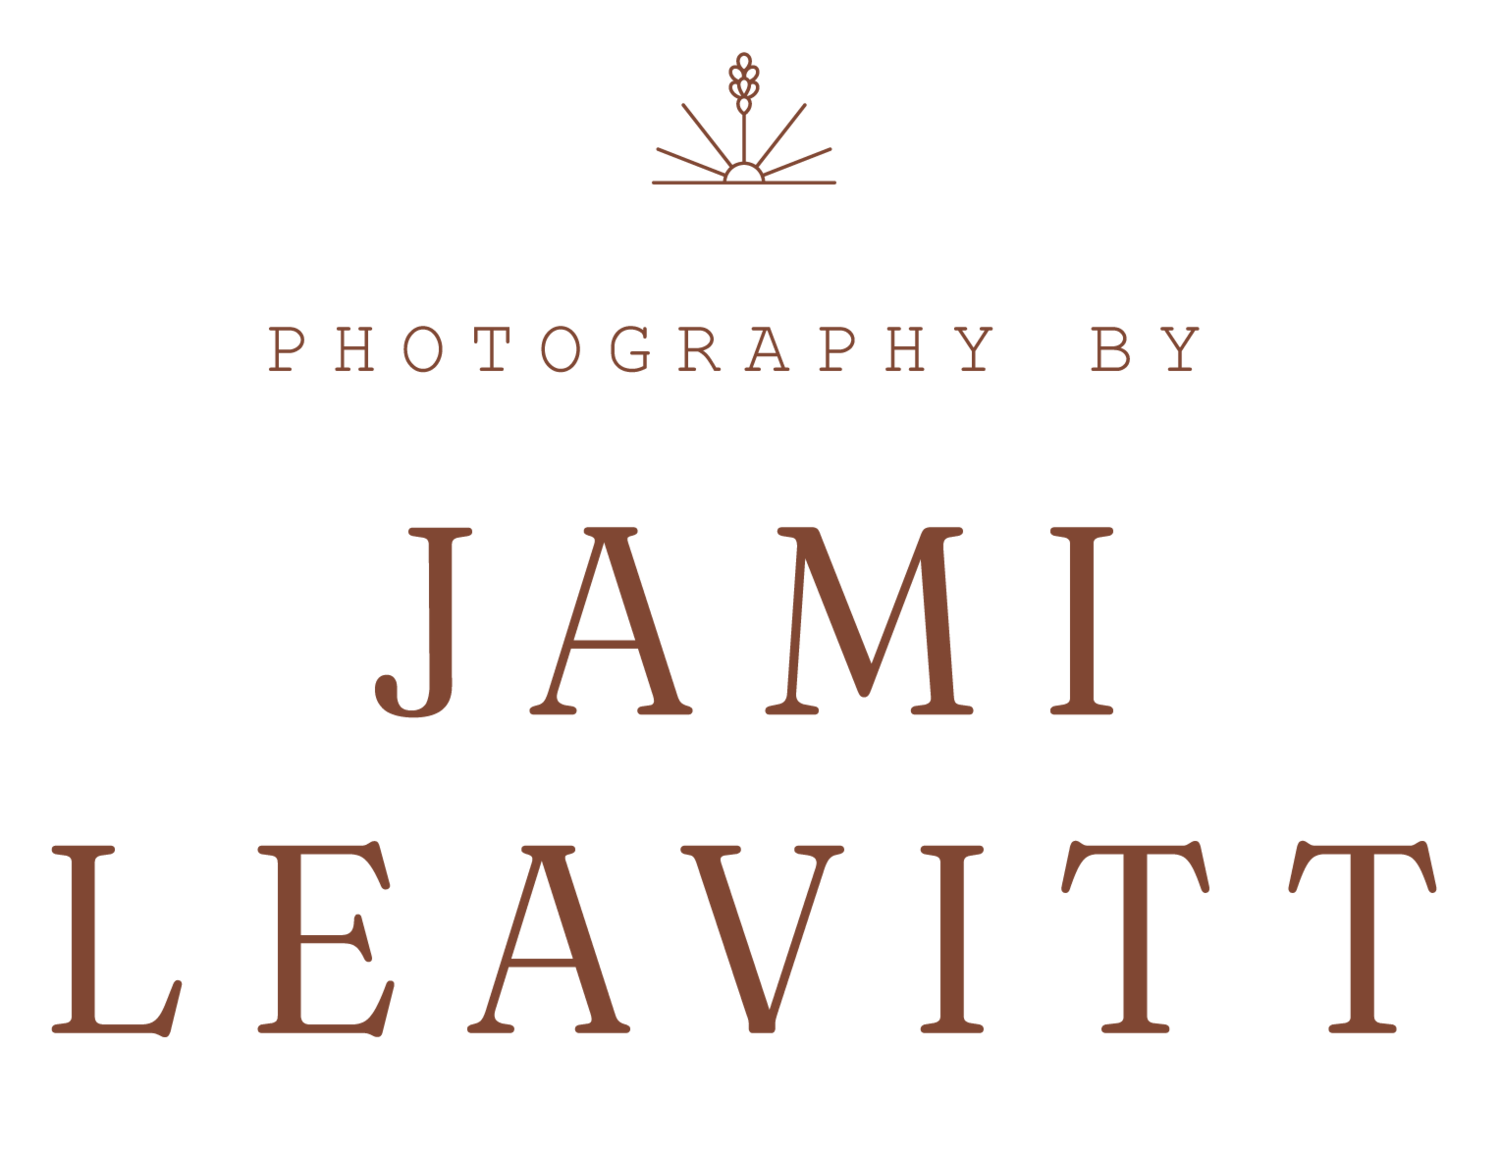 Photography by Jami Leavitt